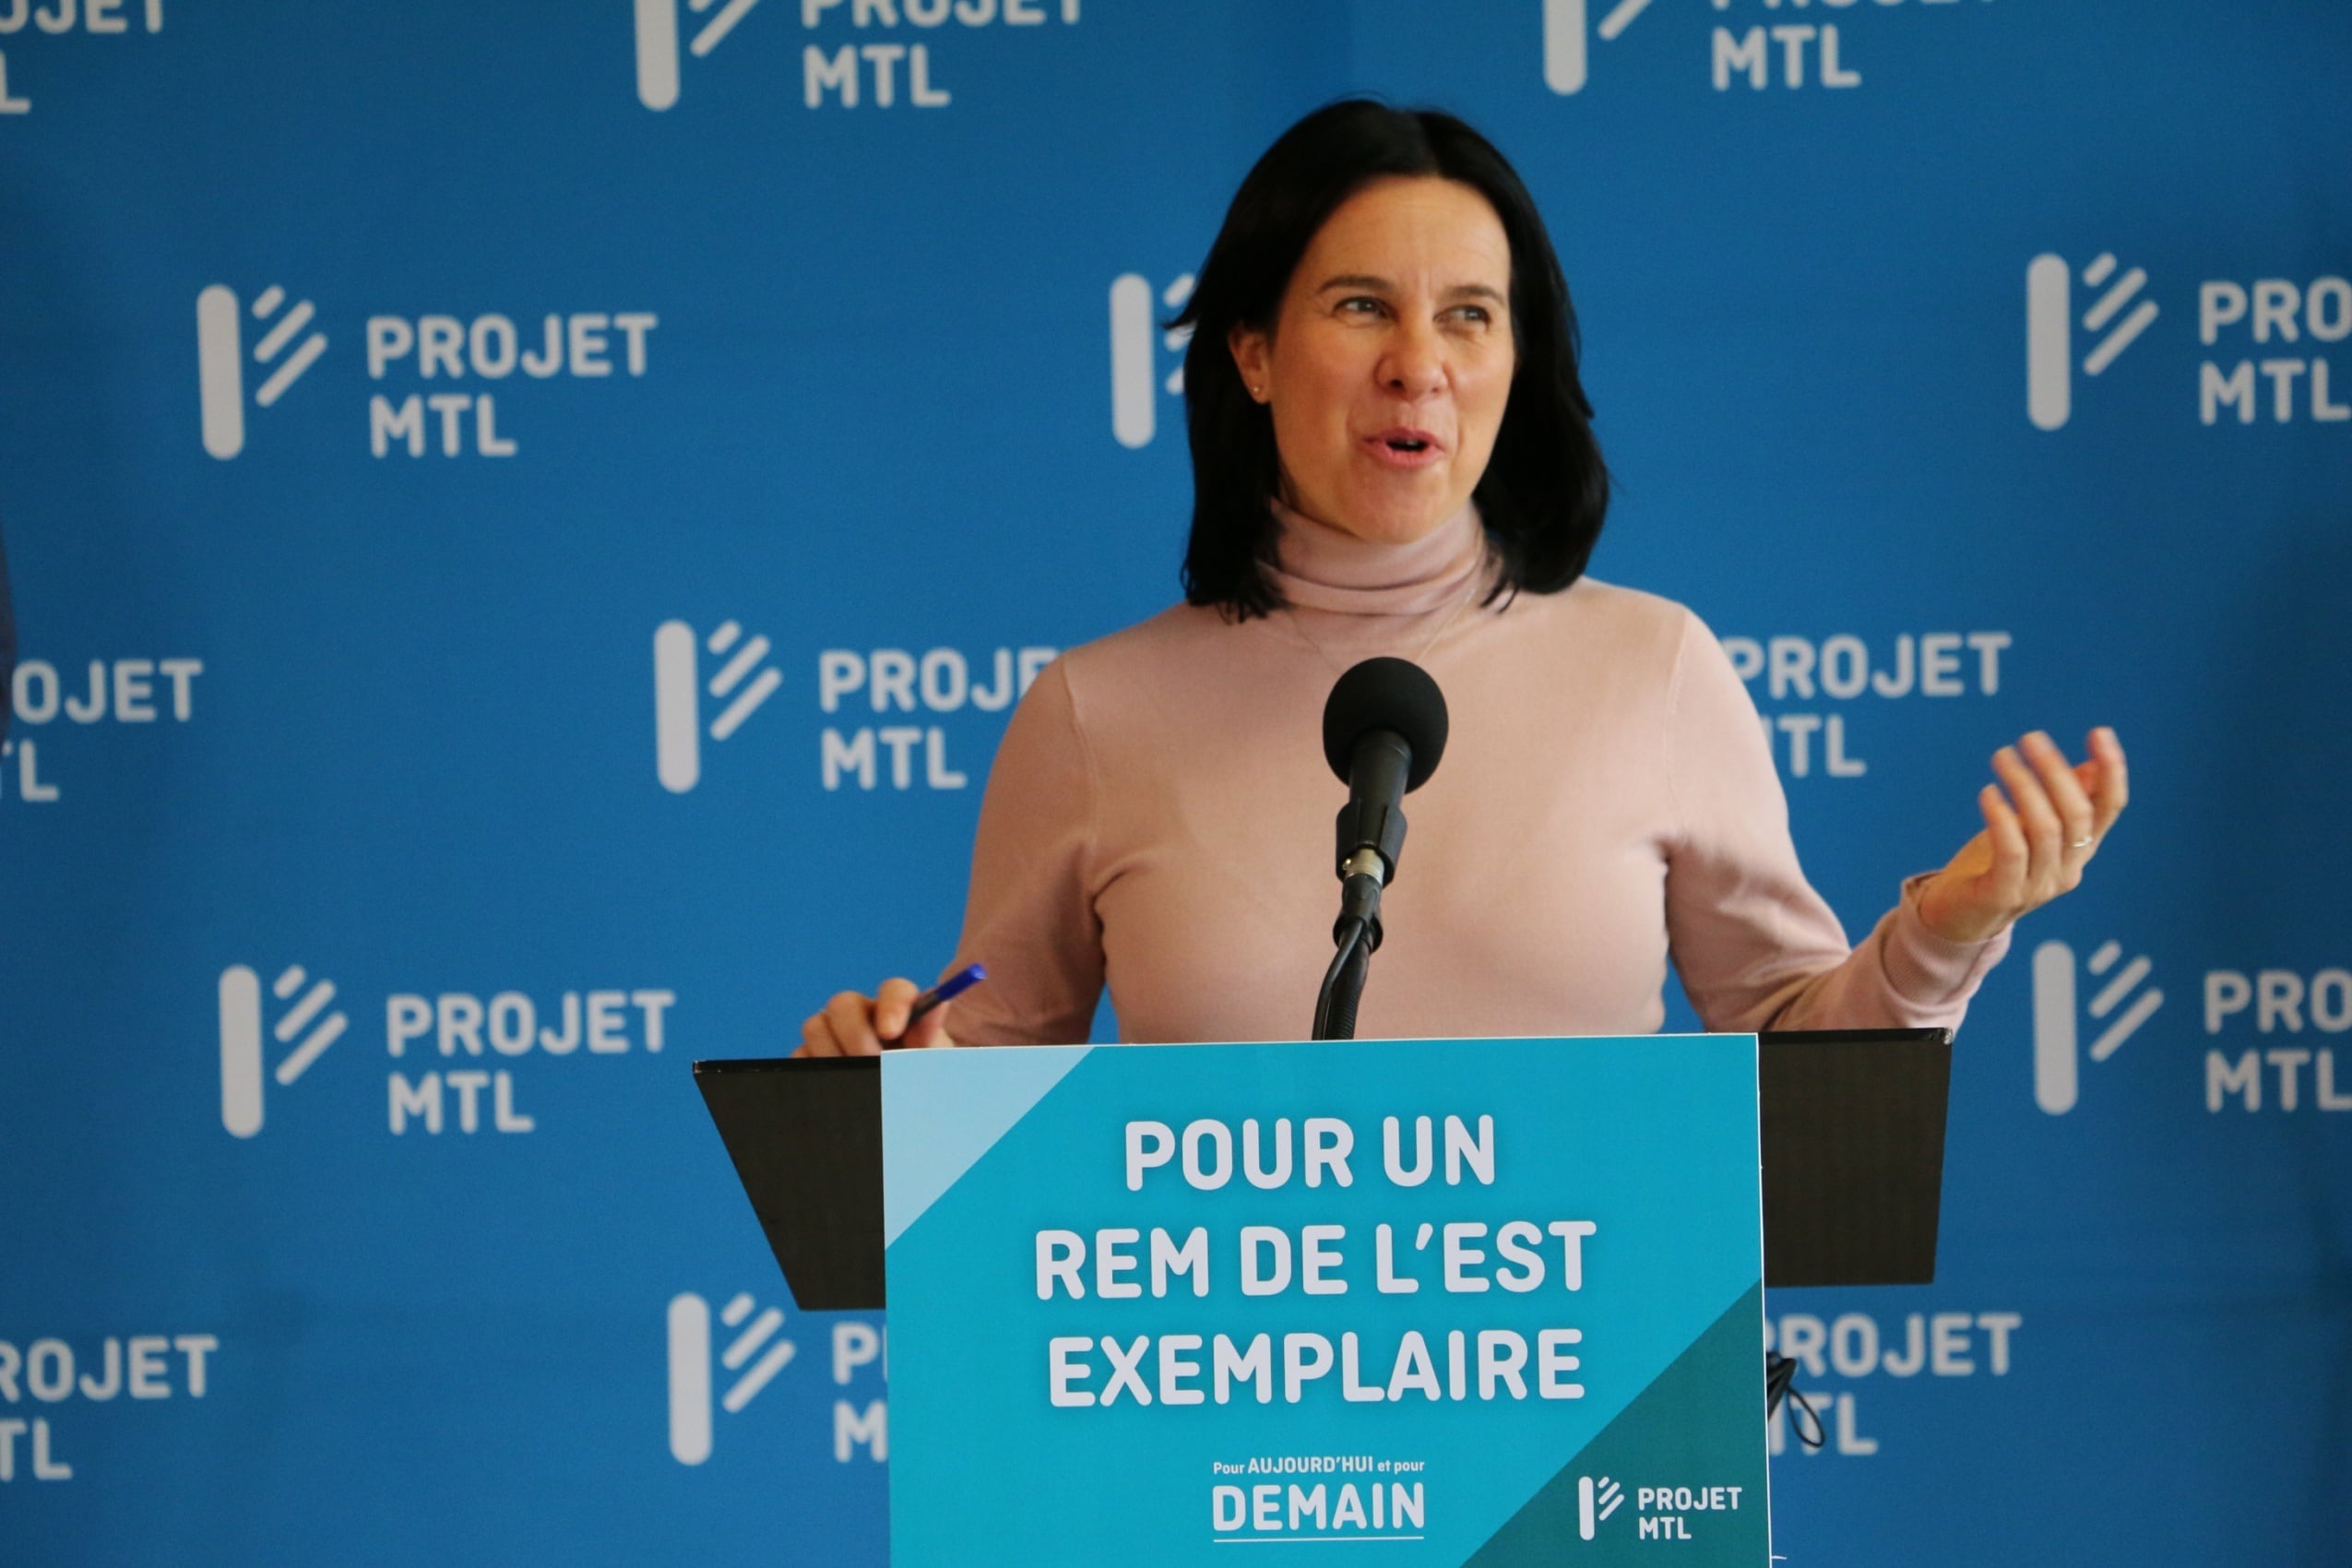 REM de l'Est: Projet Montréal will contribute to the realization of an exemplary project